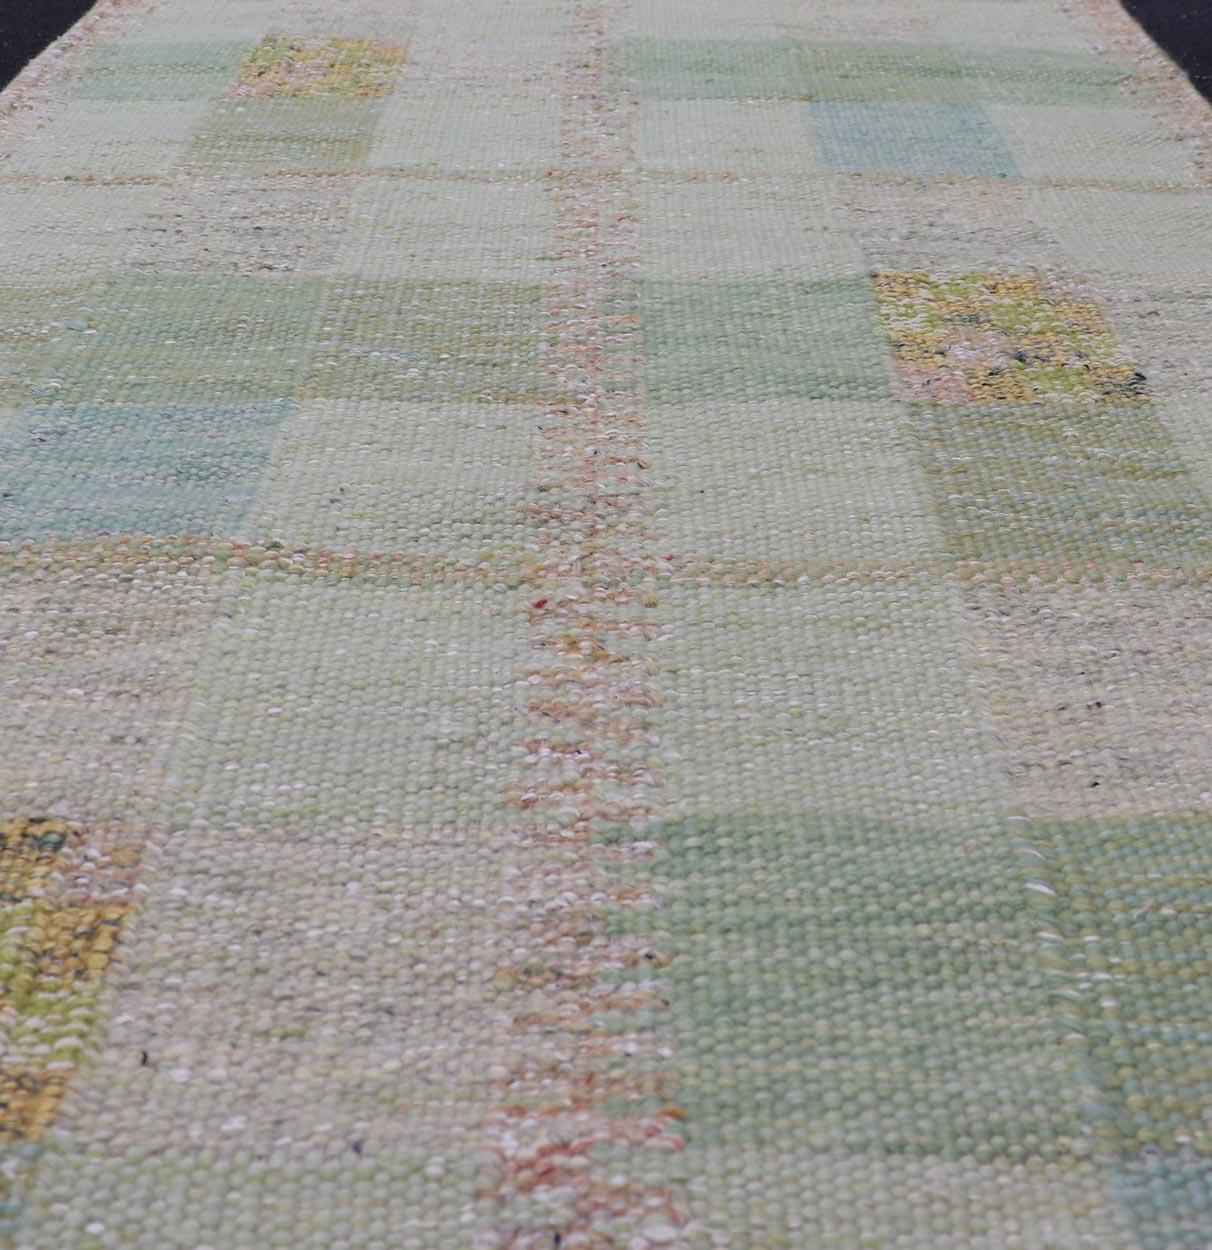 Modern Checkerboard Scandinavian Flat Weave Rug in Shades Of Green Colors. Keivan Woven Arts / rug RJK-26296-SHB-137-02, country of origin / type: Scandinavia / Scandinavian Modern.
Measures: 3'0 x 5'2 
This modern Scandinavian design flat-weave rug